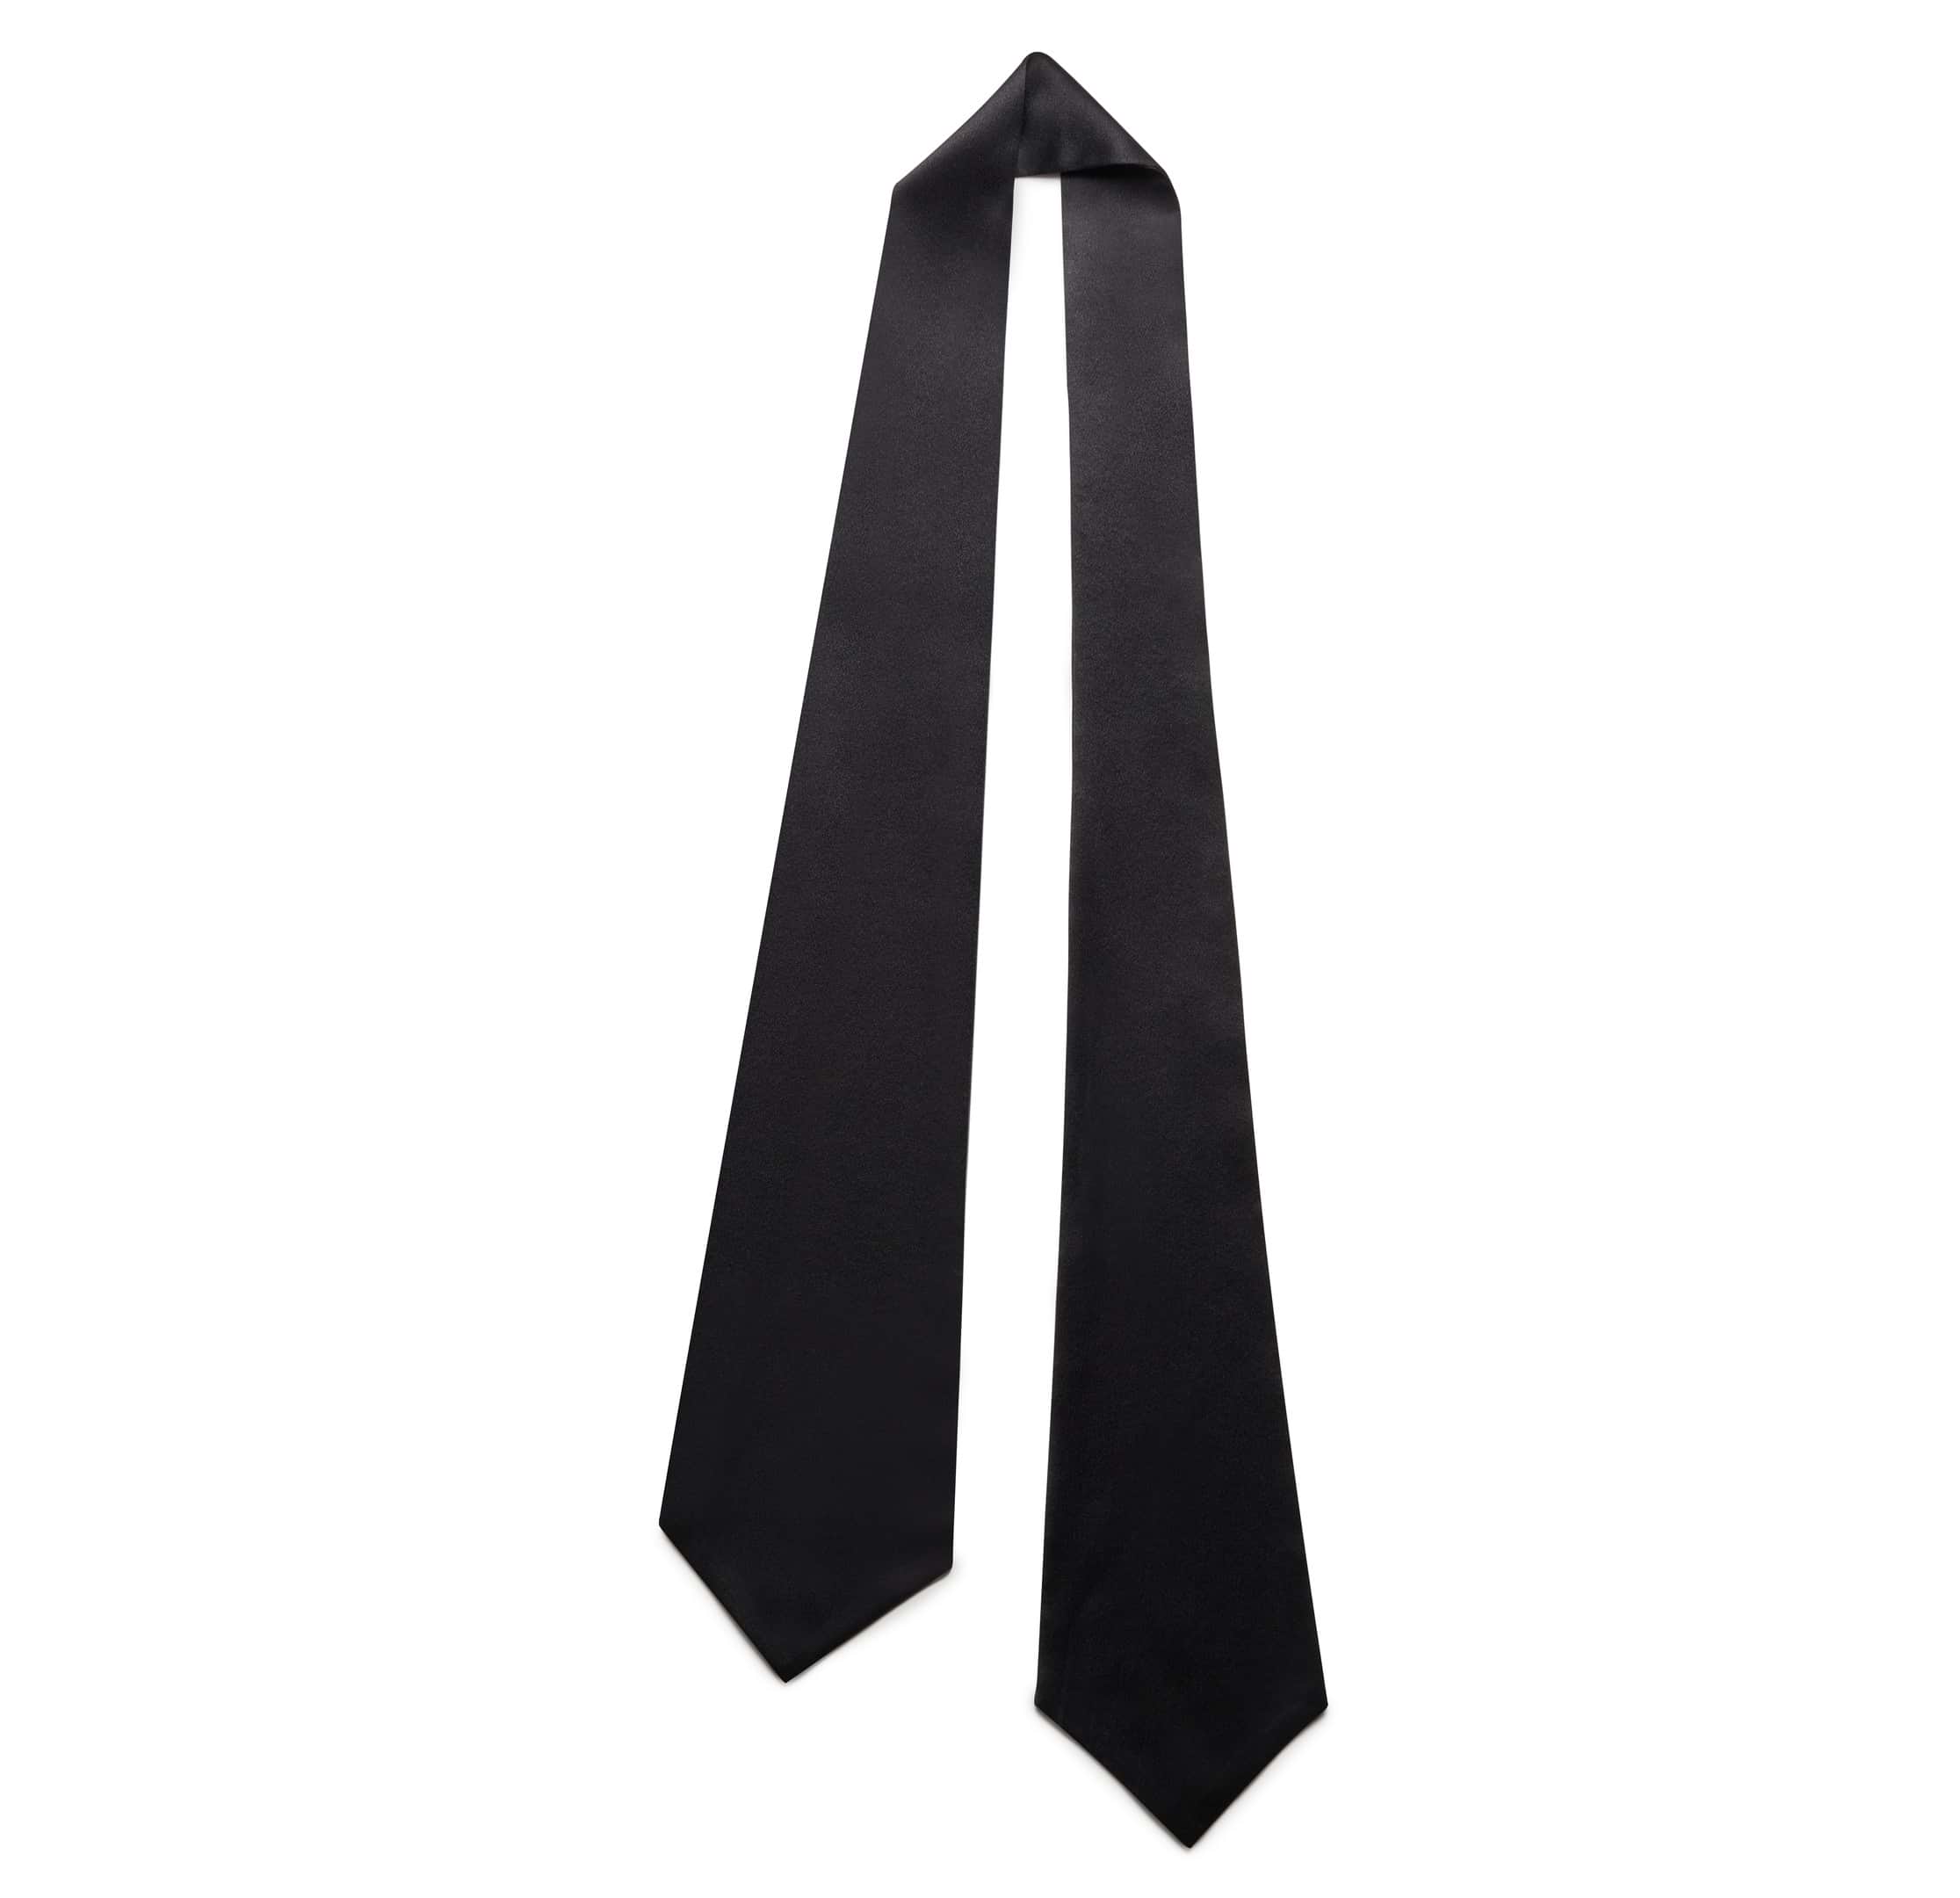 Silk Tie in black, 120 cm